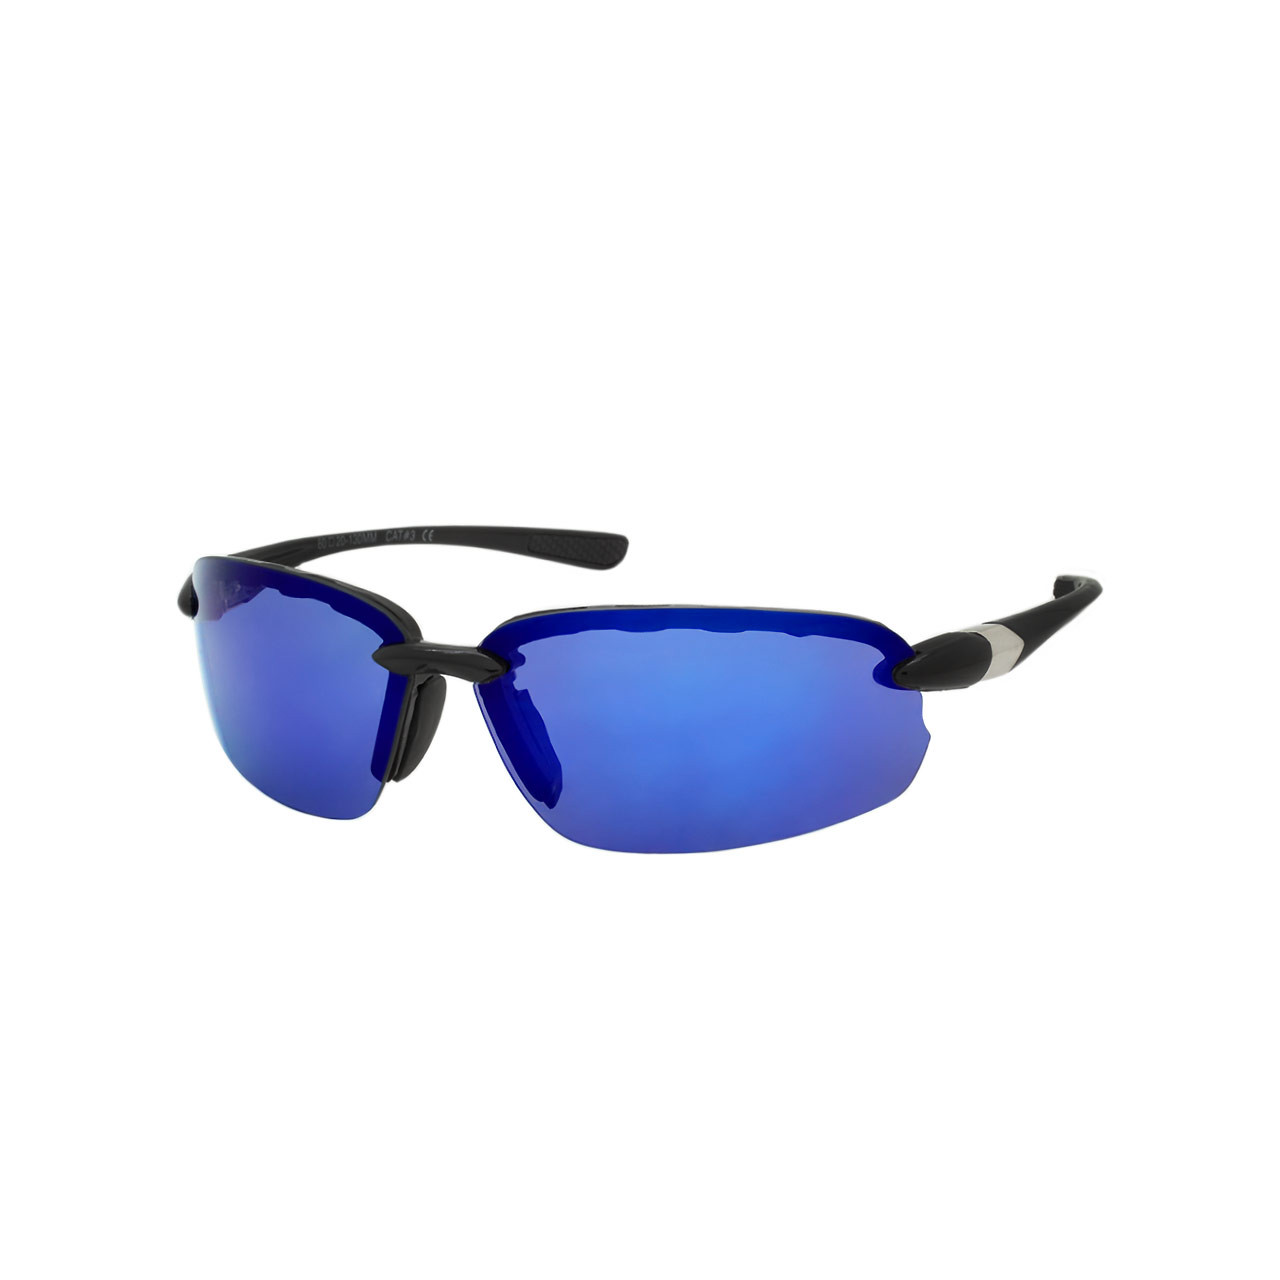 https://cdn11.bigcommerce.com/s-wz39e45/images/stencil/1280x1280/products/4210/36232/Mens-Sport-Semi-Rimless-Sunglasses-GY05-A__98282.1631218290.jpg?c=2